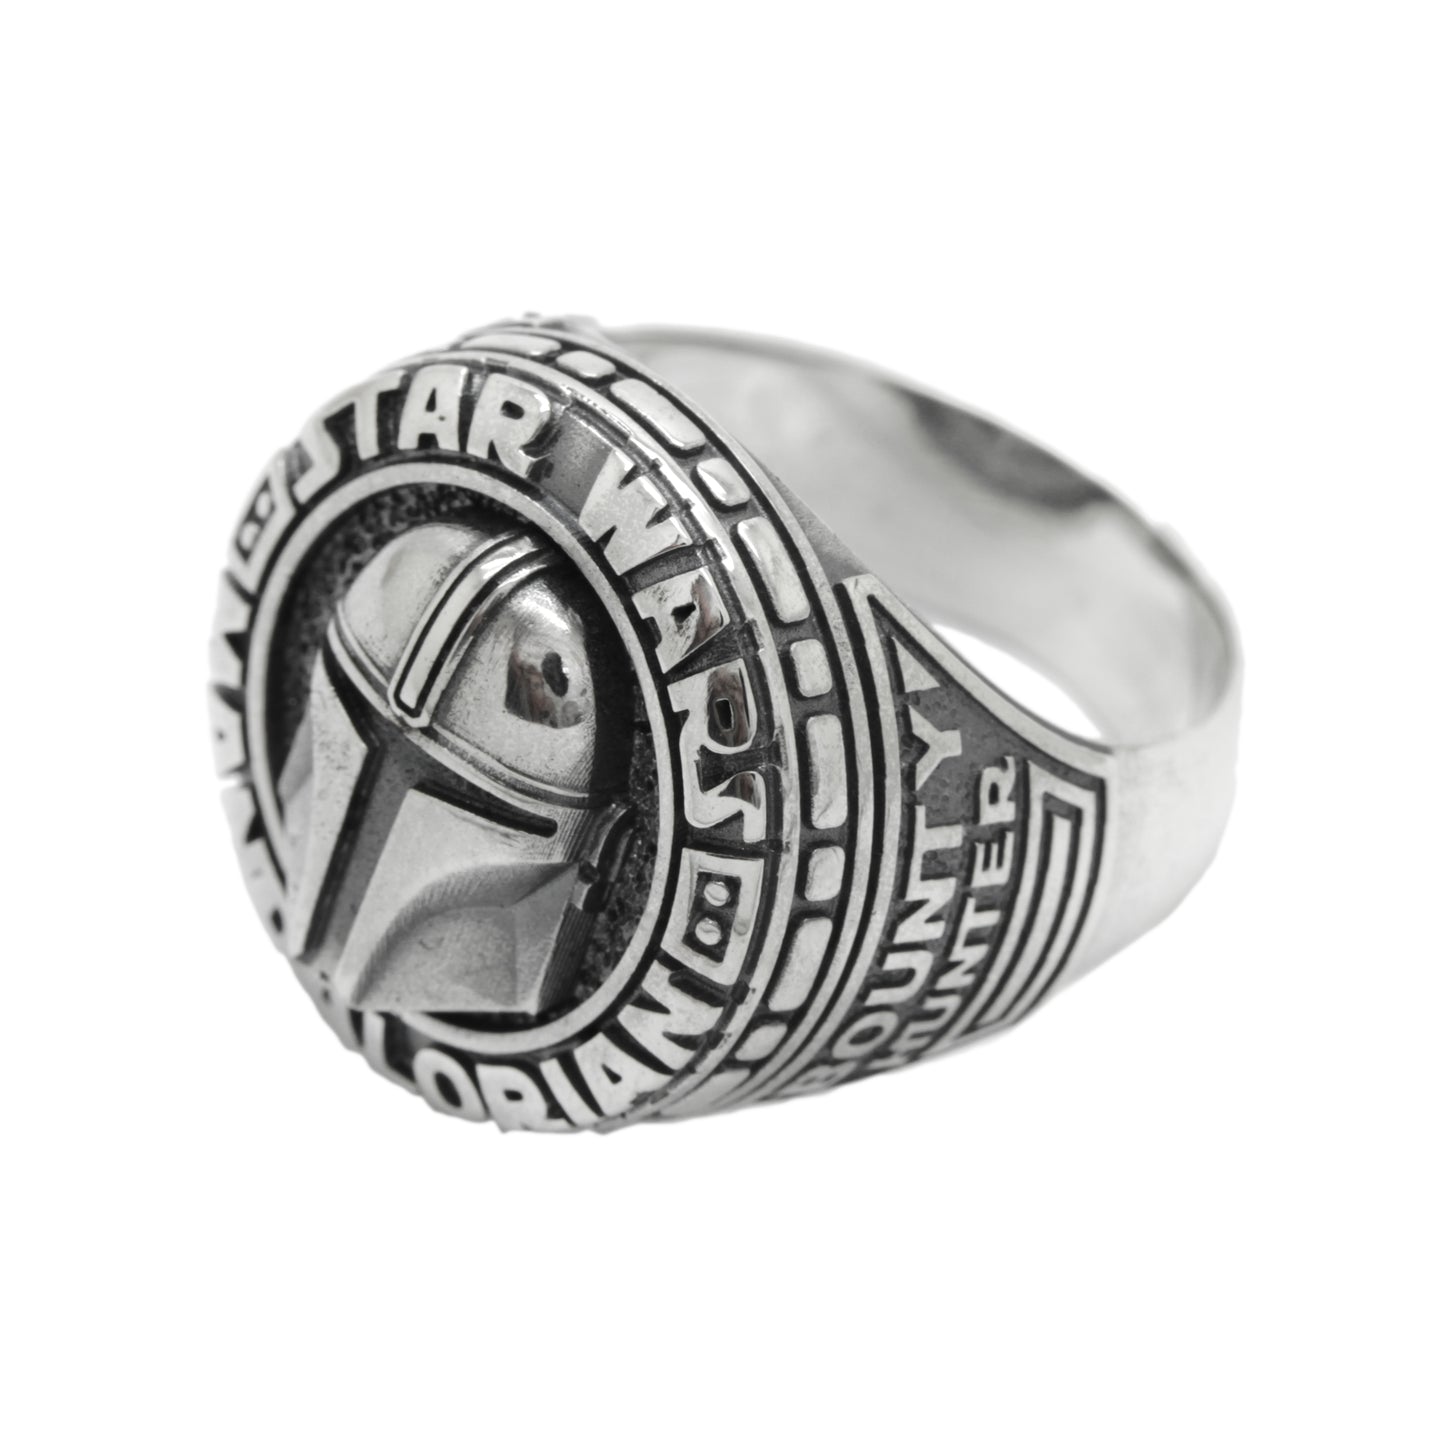 Pánský prsten Mandalorian Star Wars Silver 925